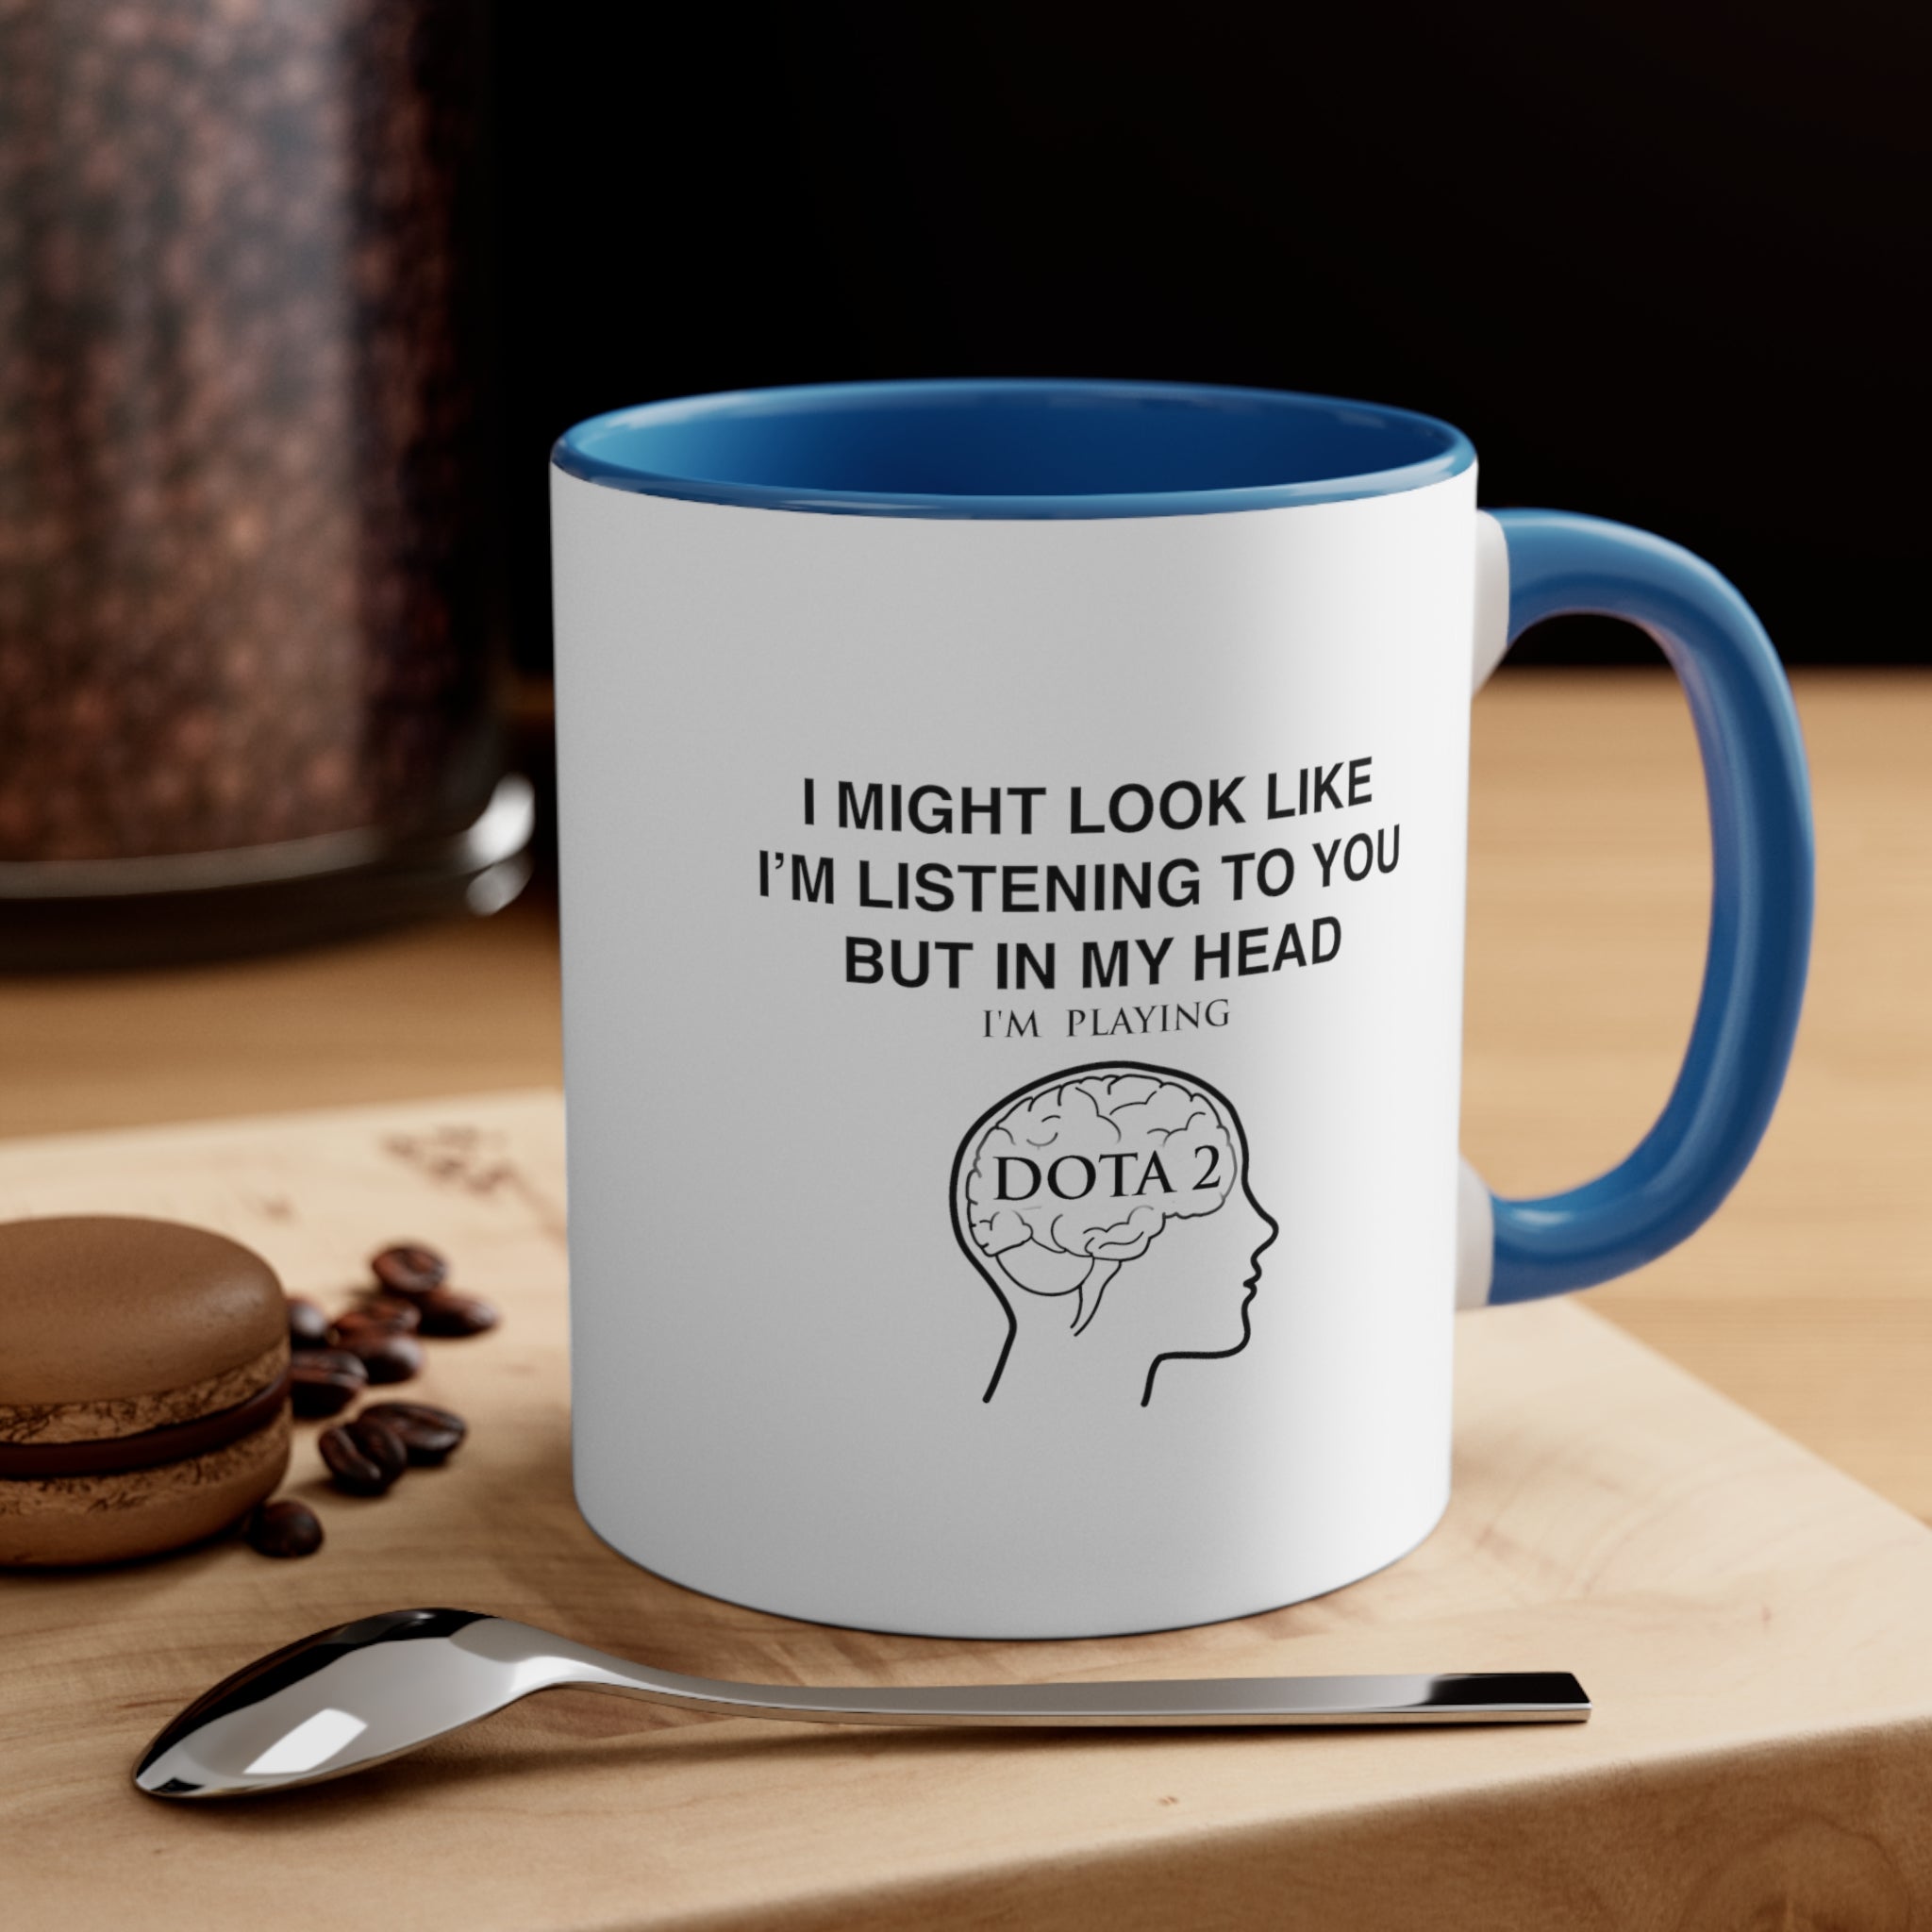 DOTA 2 Funny Coffee Mug, 11oz I Might Look Like I'm Listening Humor Humour Joke Gift For Him Gamer Mug Cup Birthday Christmas Valentine's